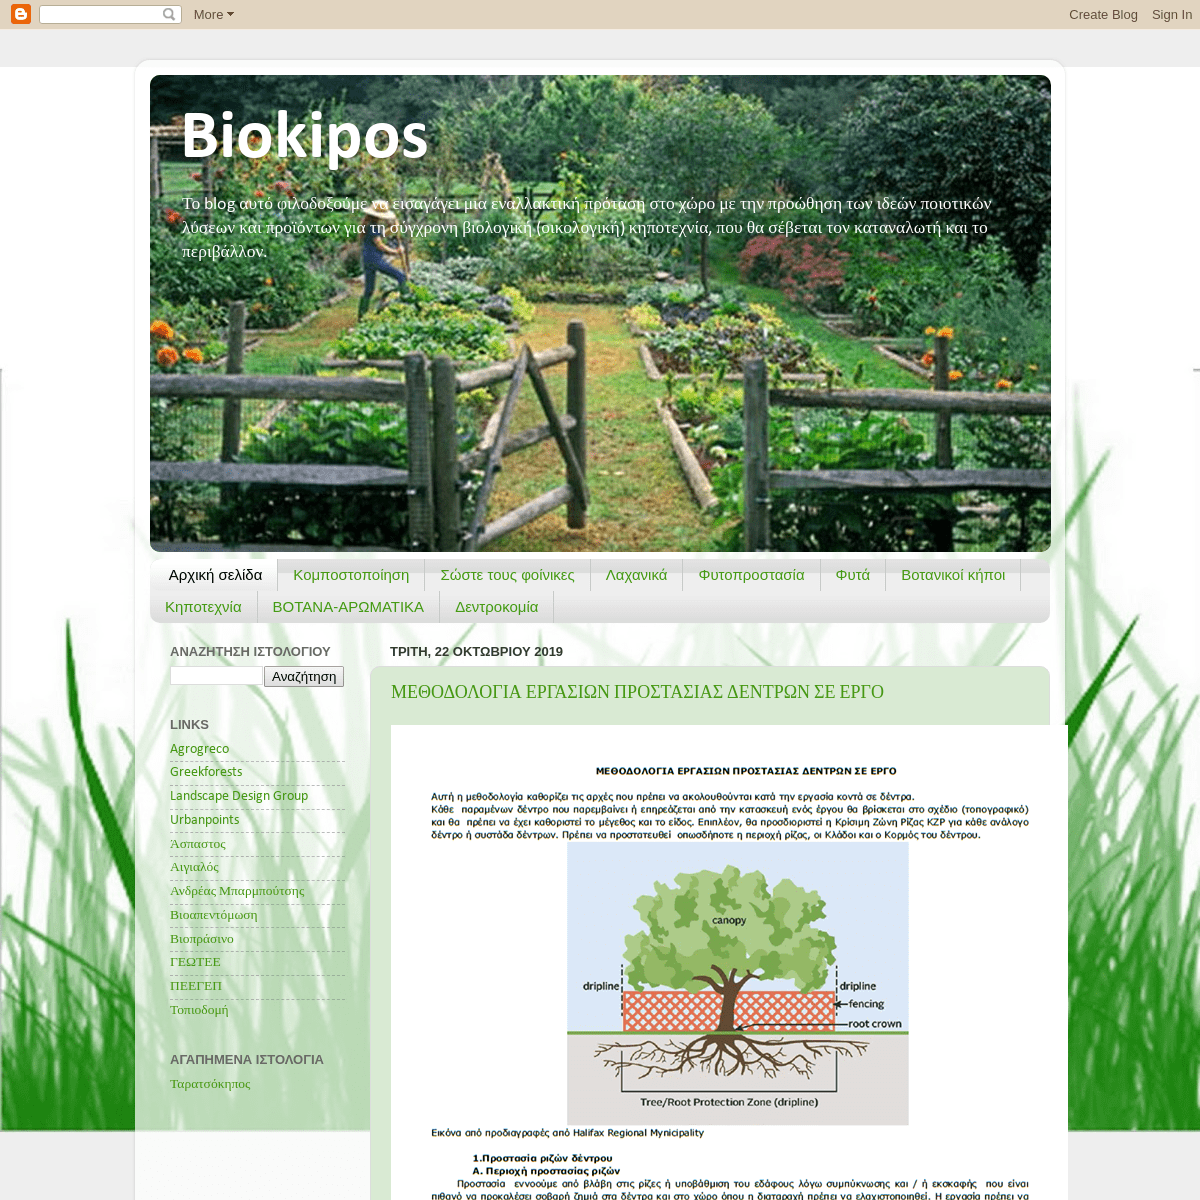 A complete backup of biokipos.blogspot.com